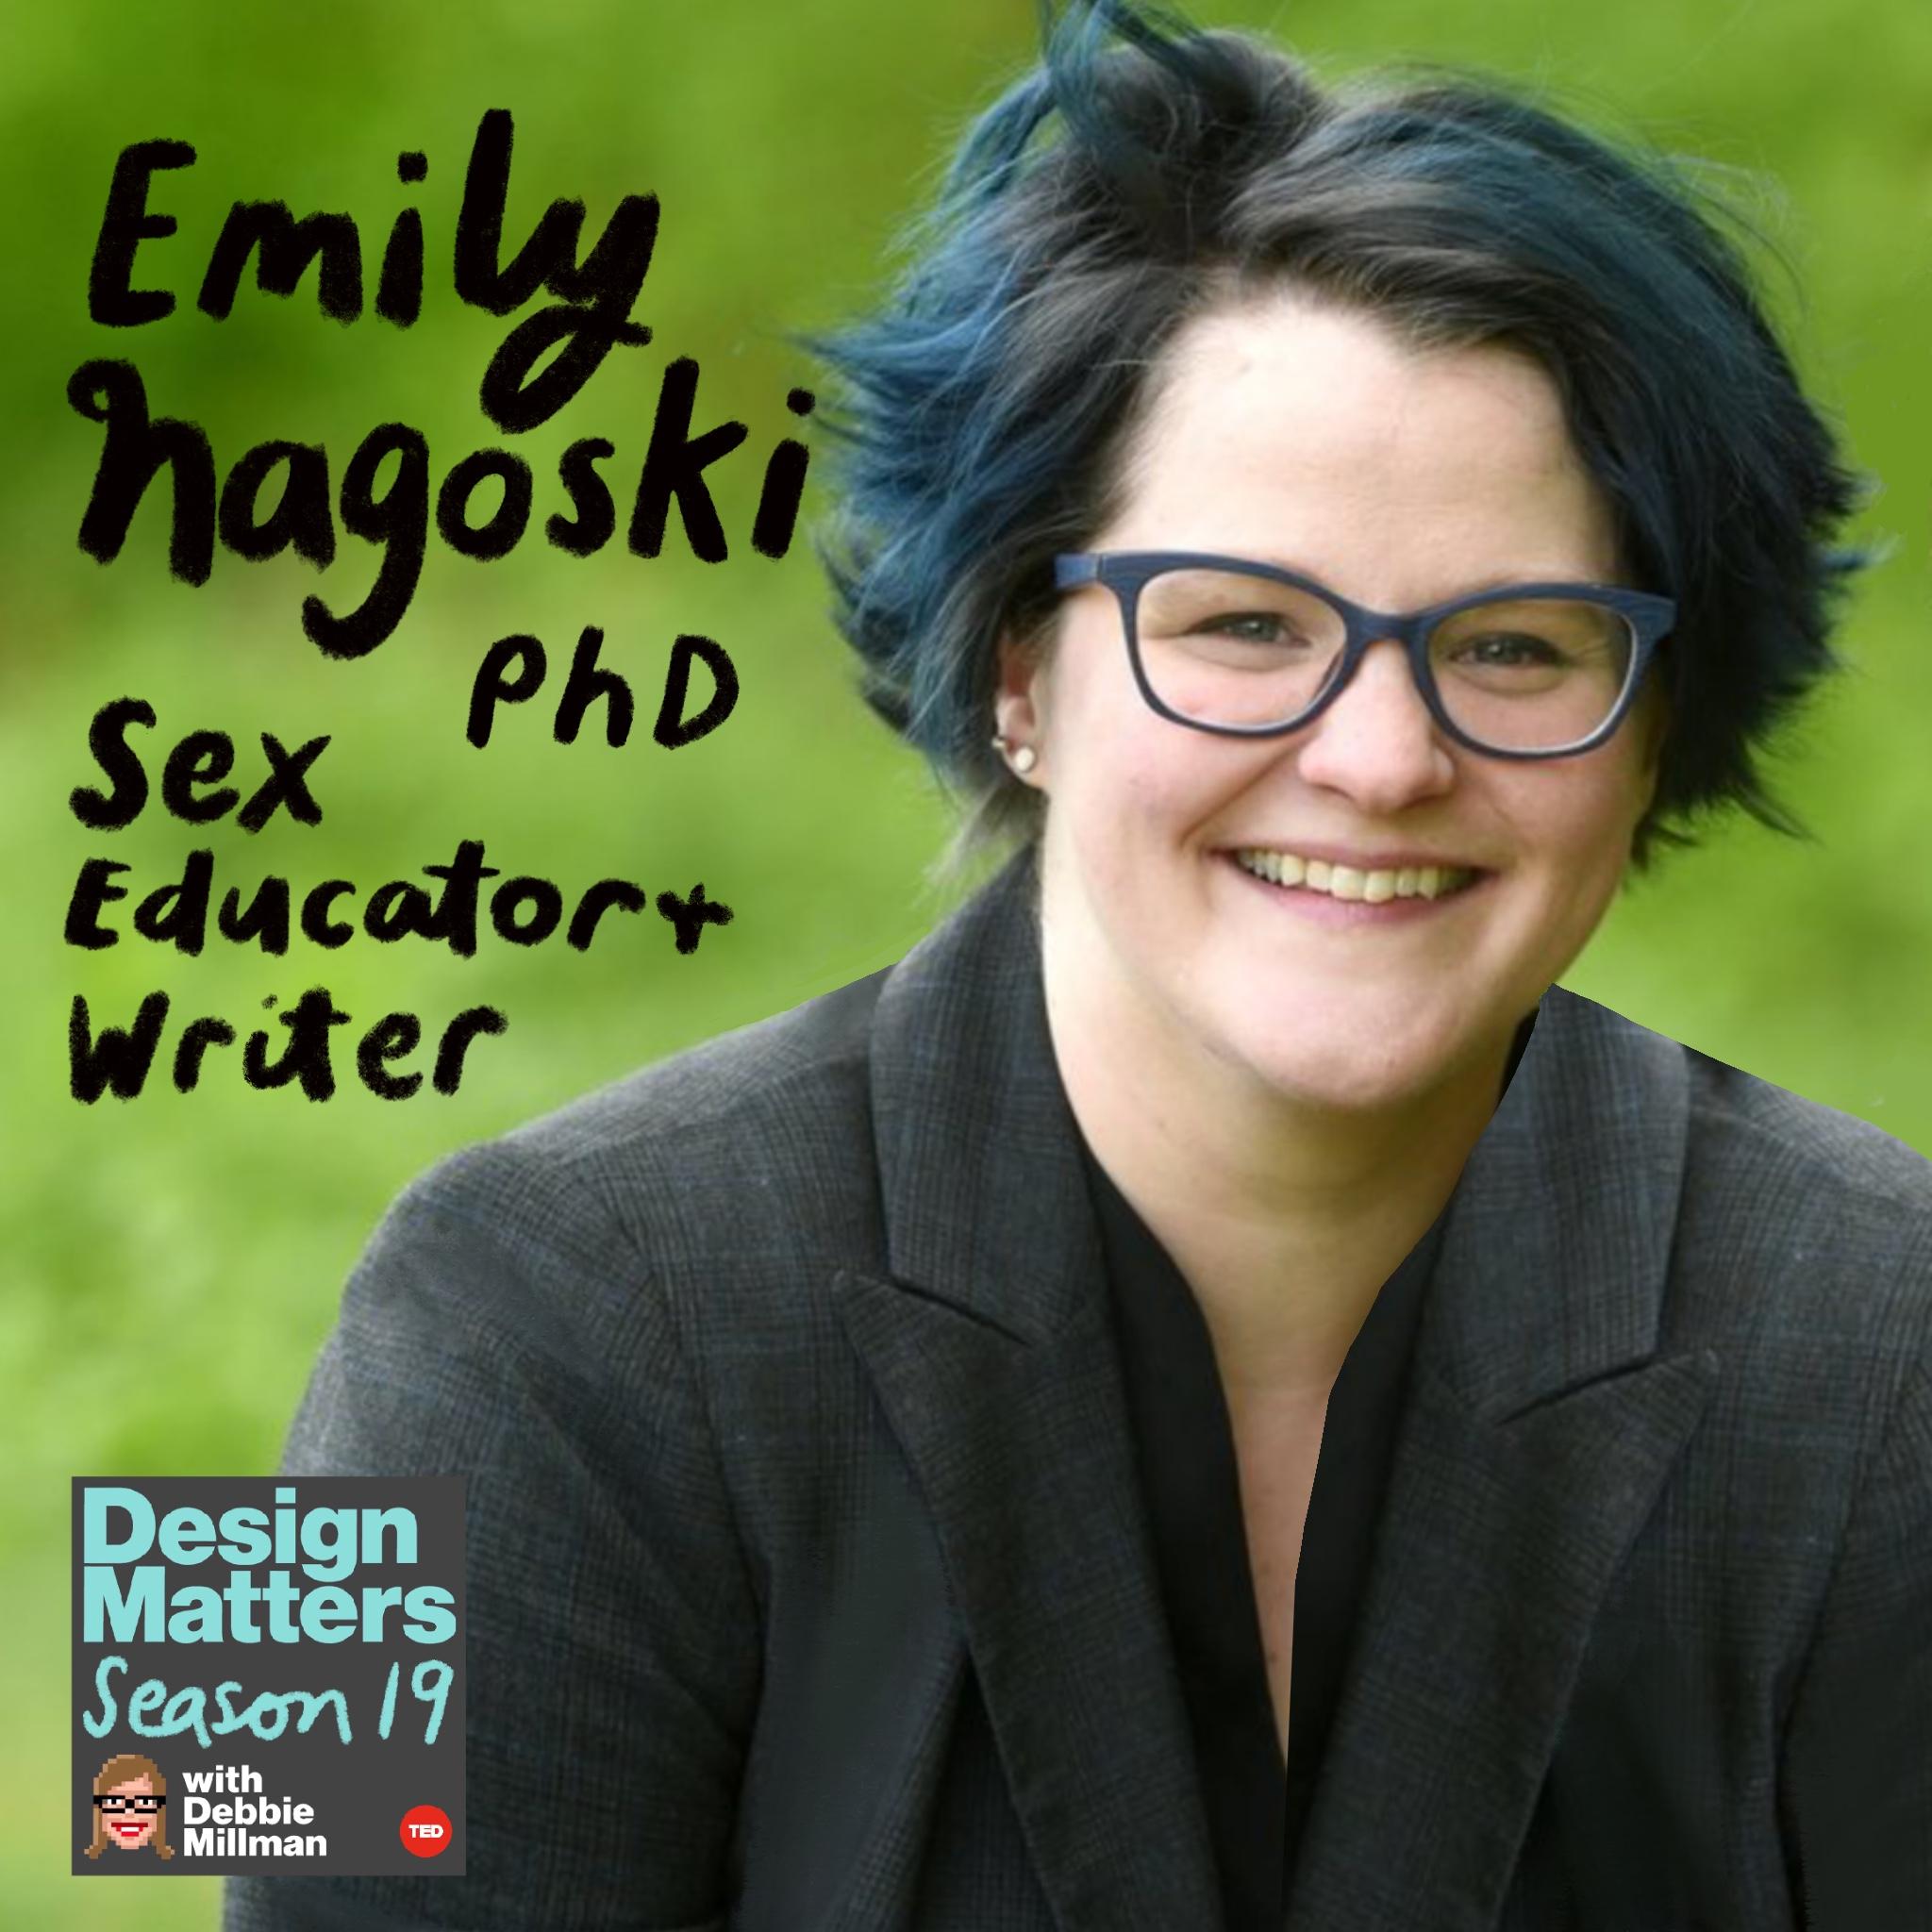 Thumbnail for "Emily Nagoski, Ph.D.".